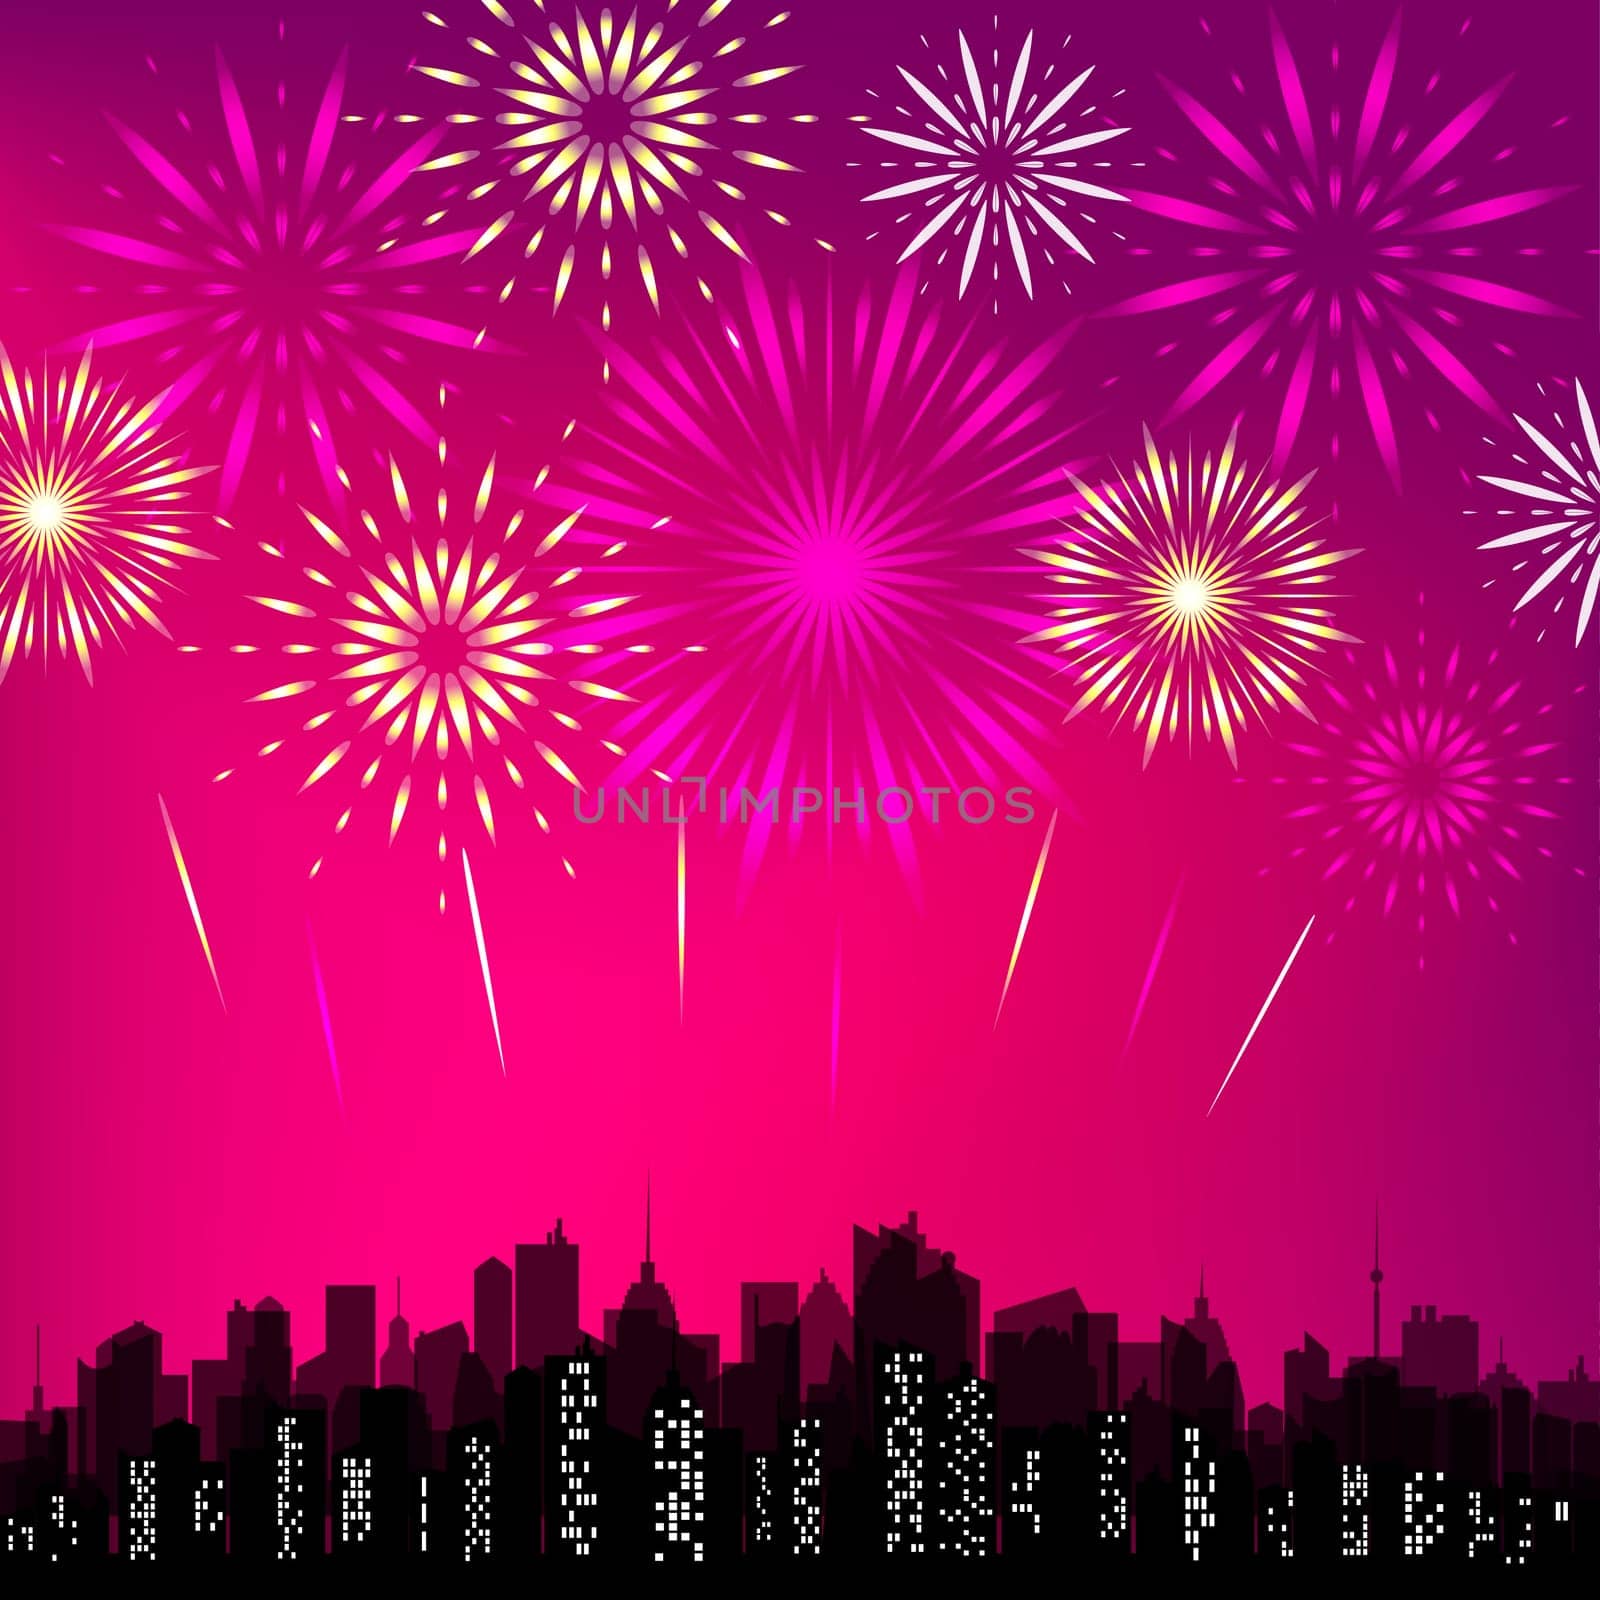 City skyline with festive fireworks. Glowing light over the city. Holiday cityscape jpeg illustration by Fyuriy